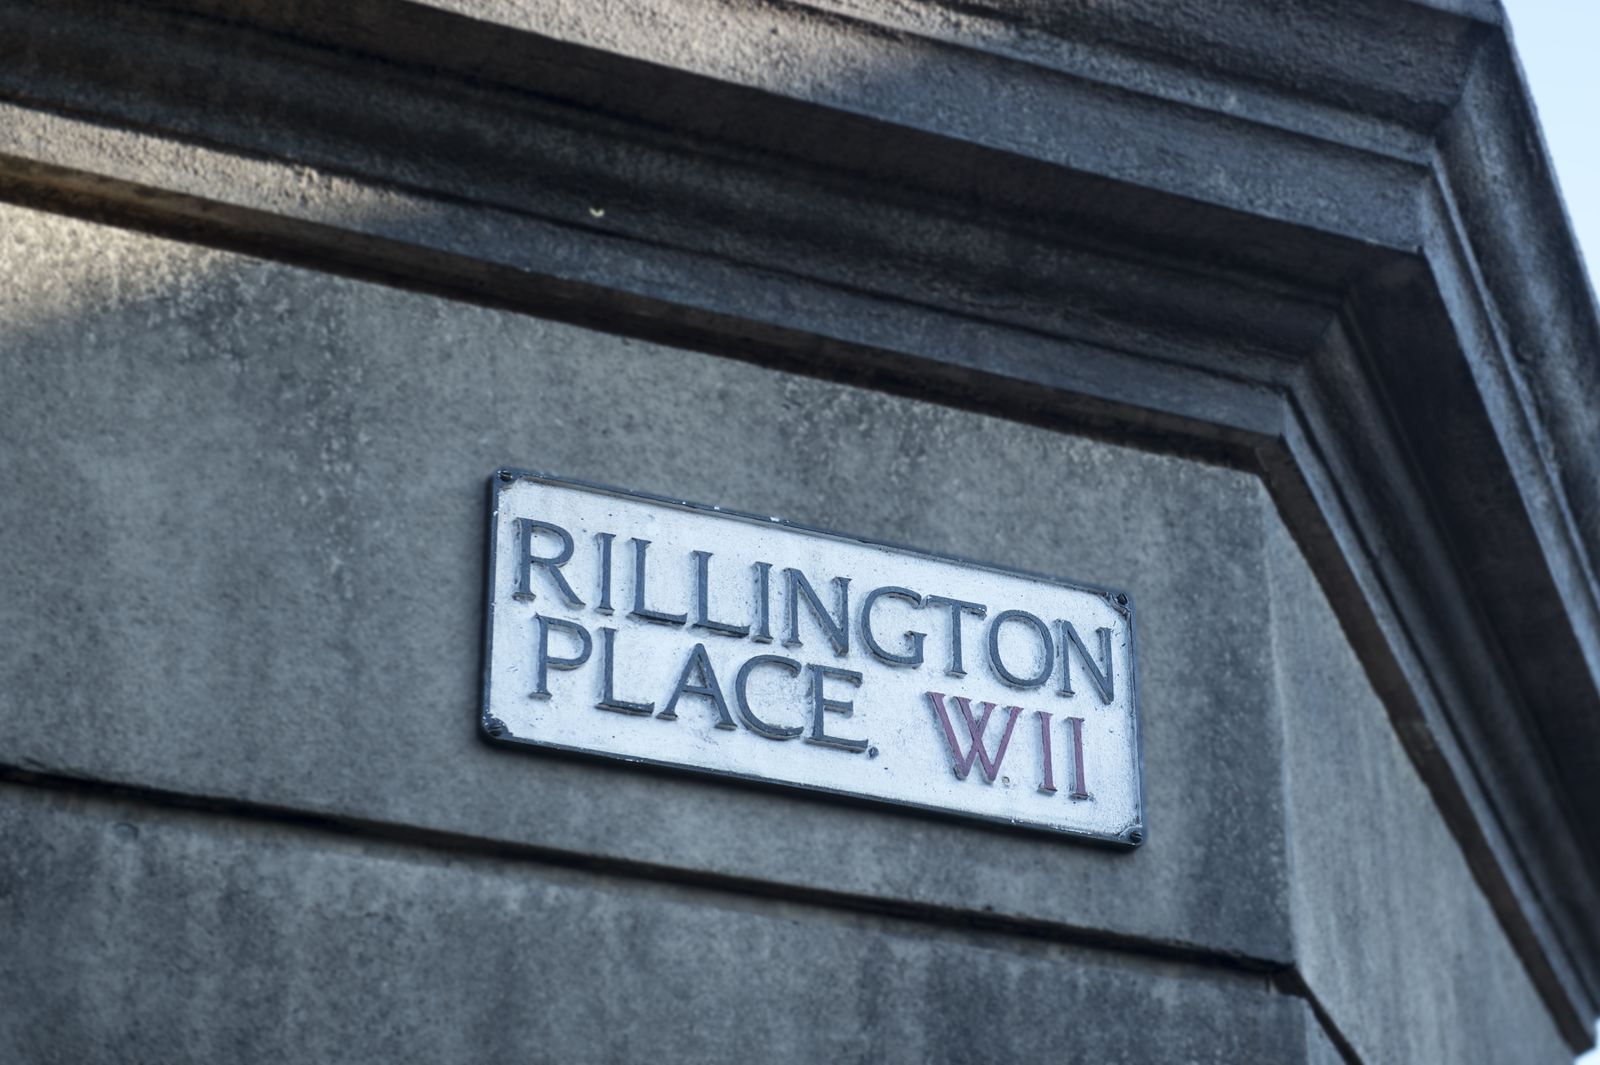 Rillington Place - sign